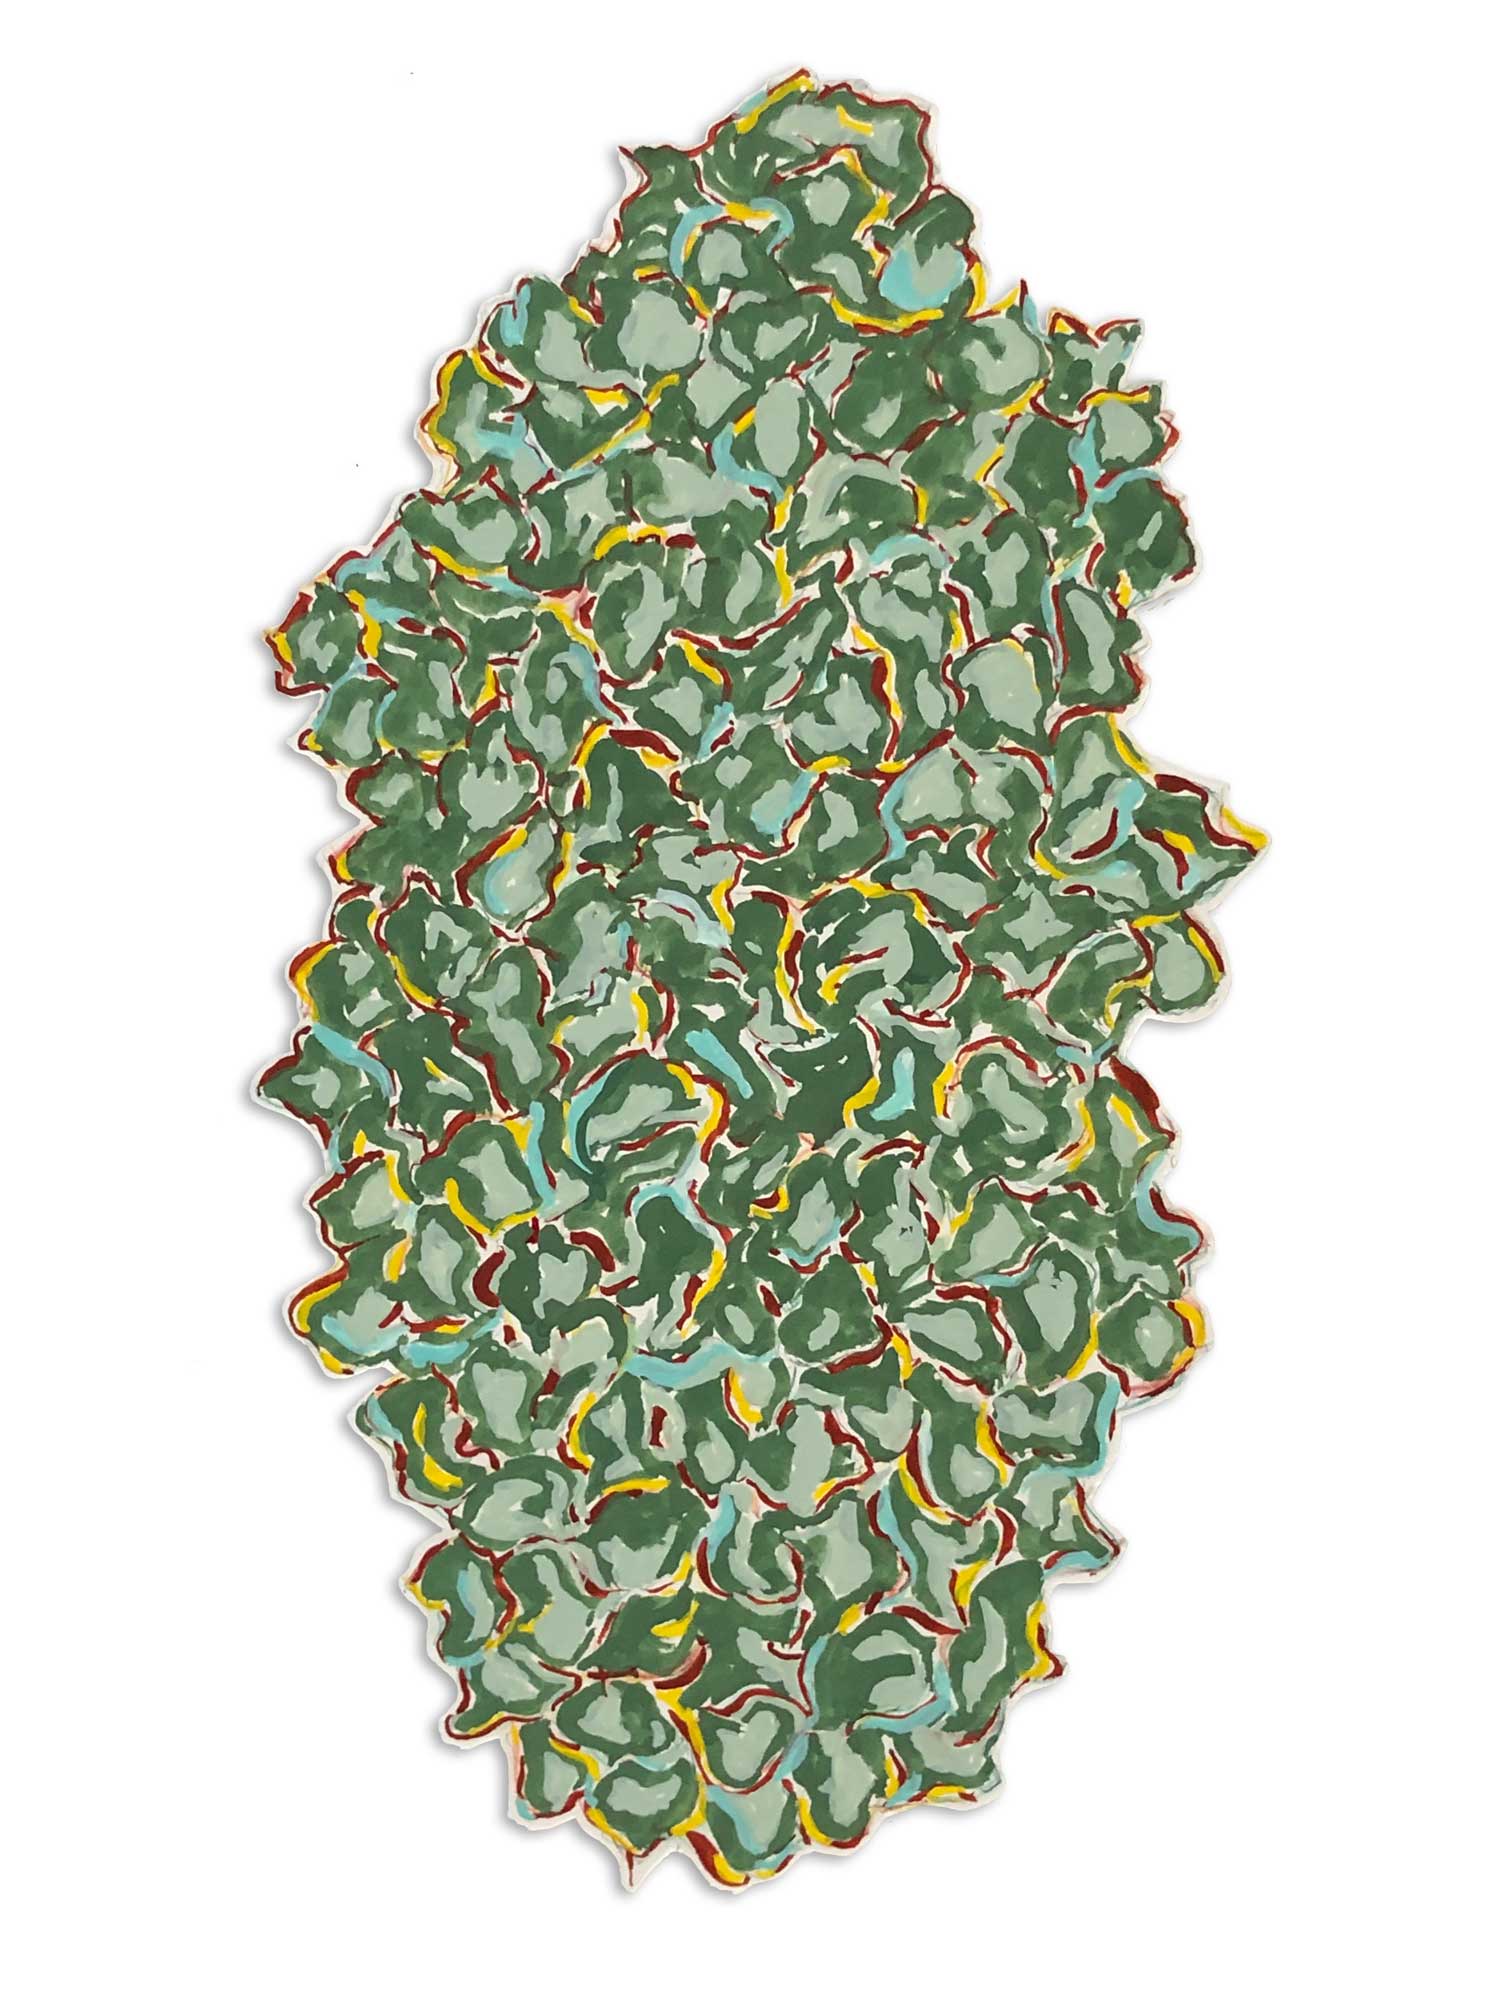 Untitled (Chrysanthemum Leaf)